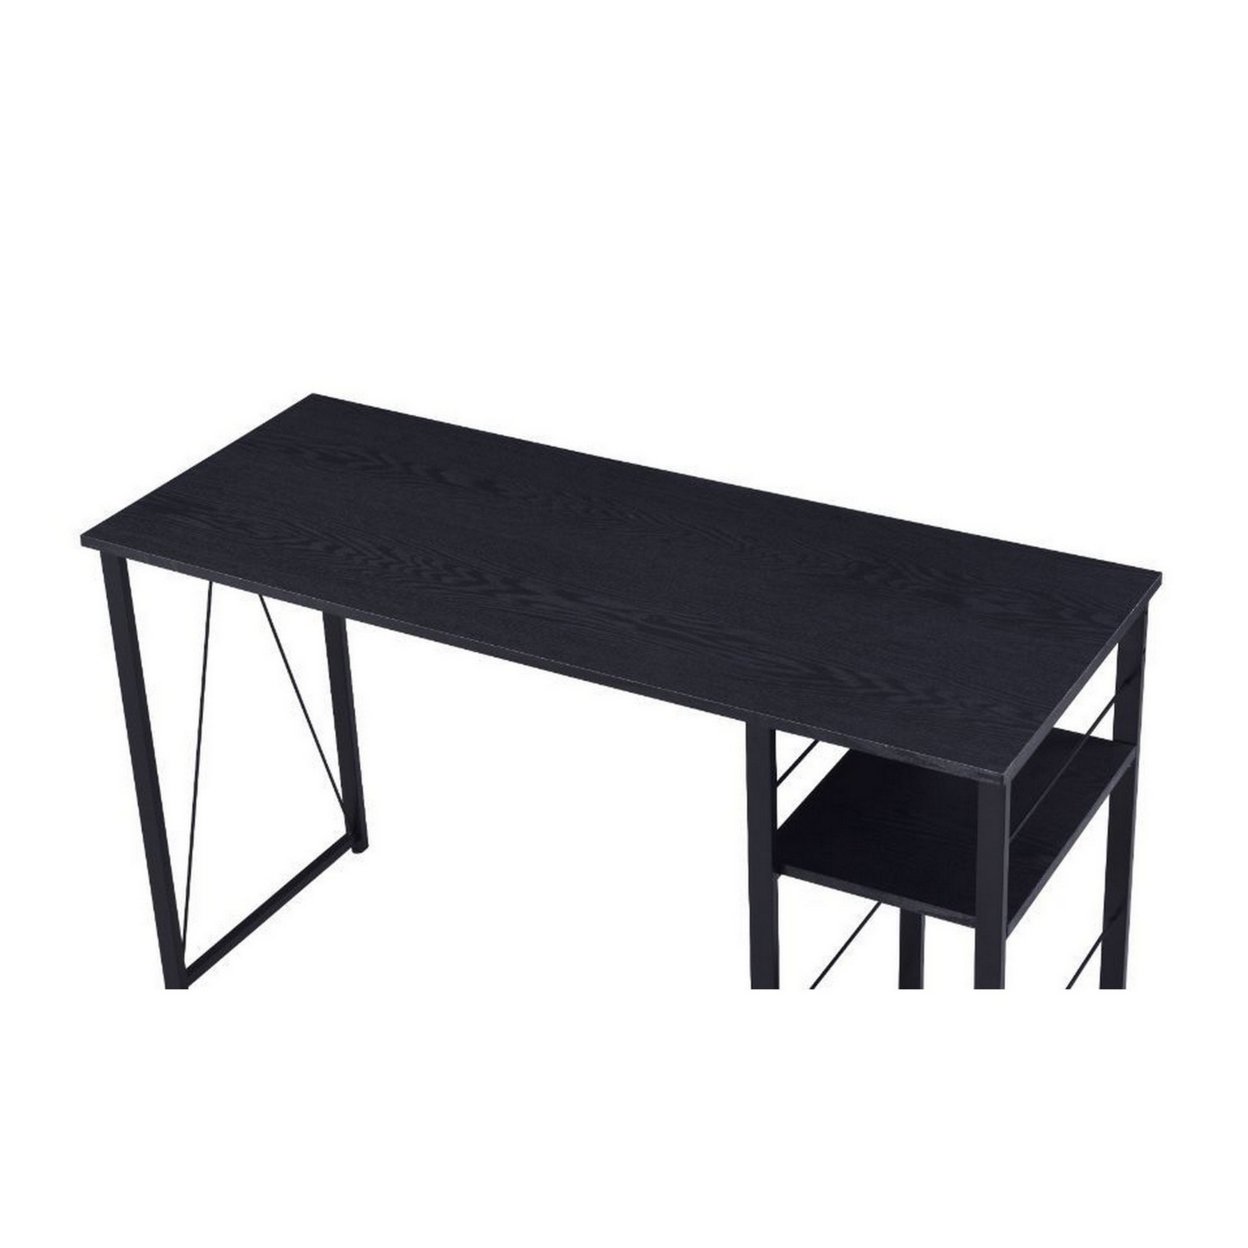 Writing Desk With 2 Tier Side Shelves And Tubular Metal Legs, Black- Saltoro Sherpi